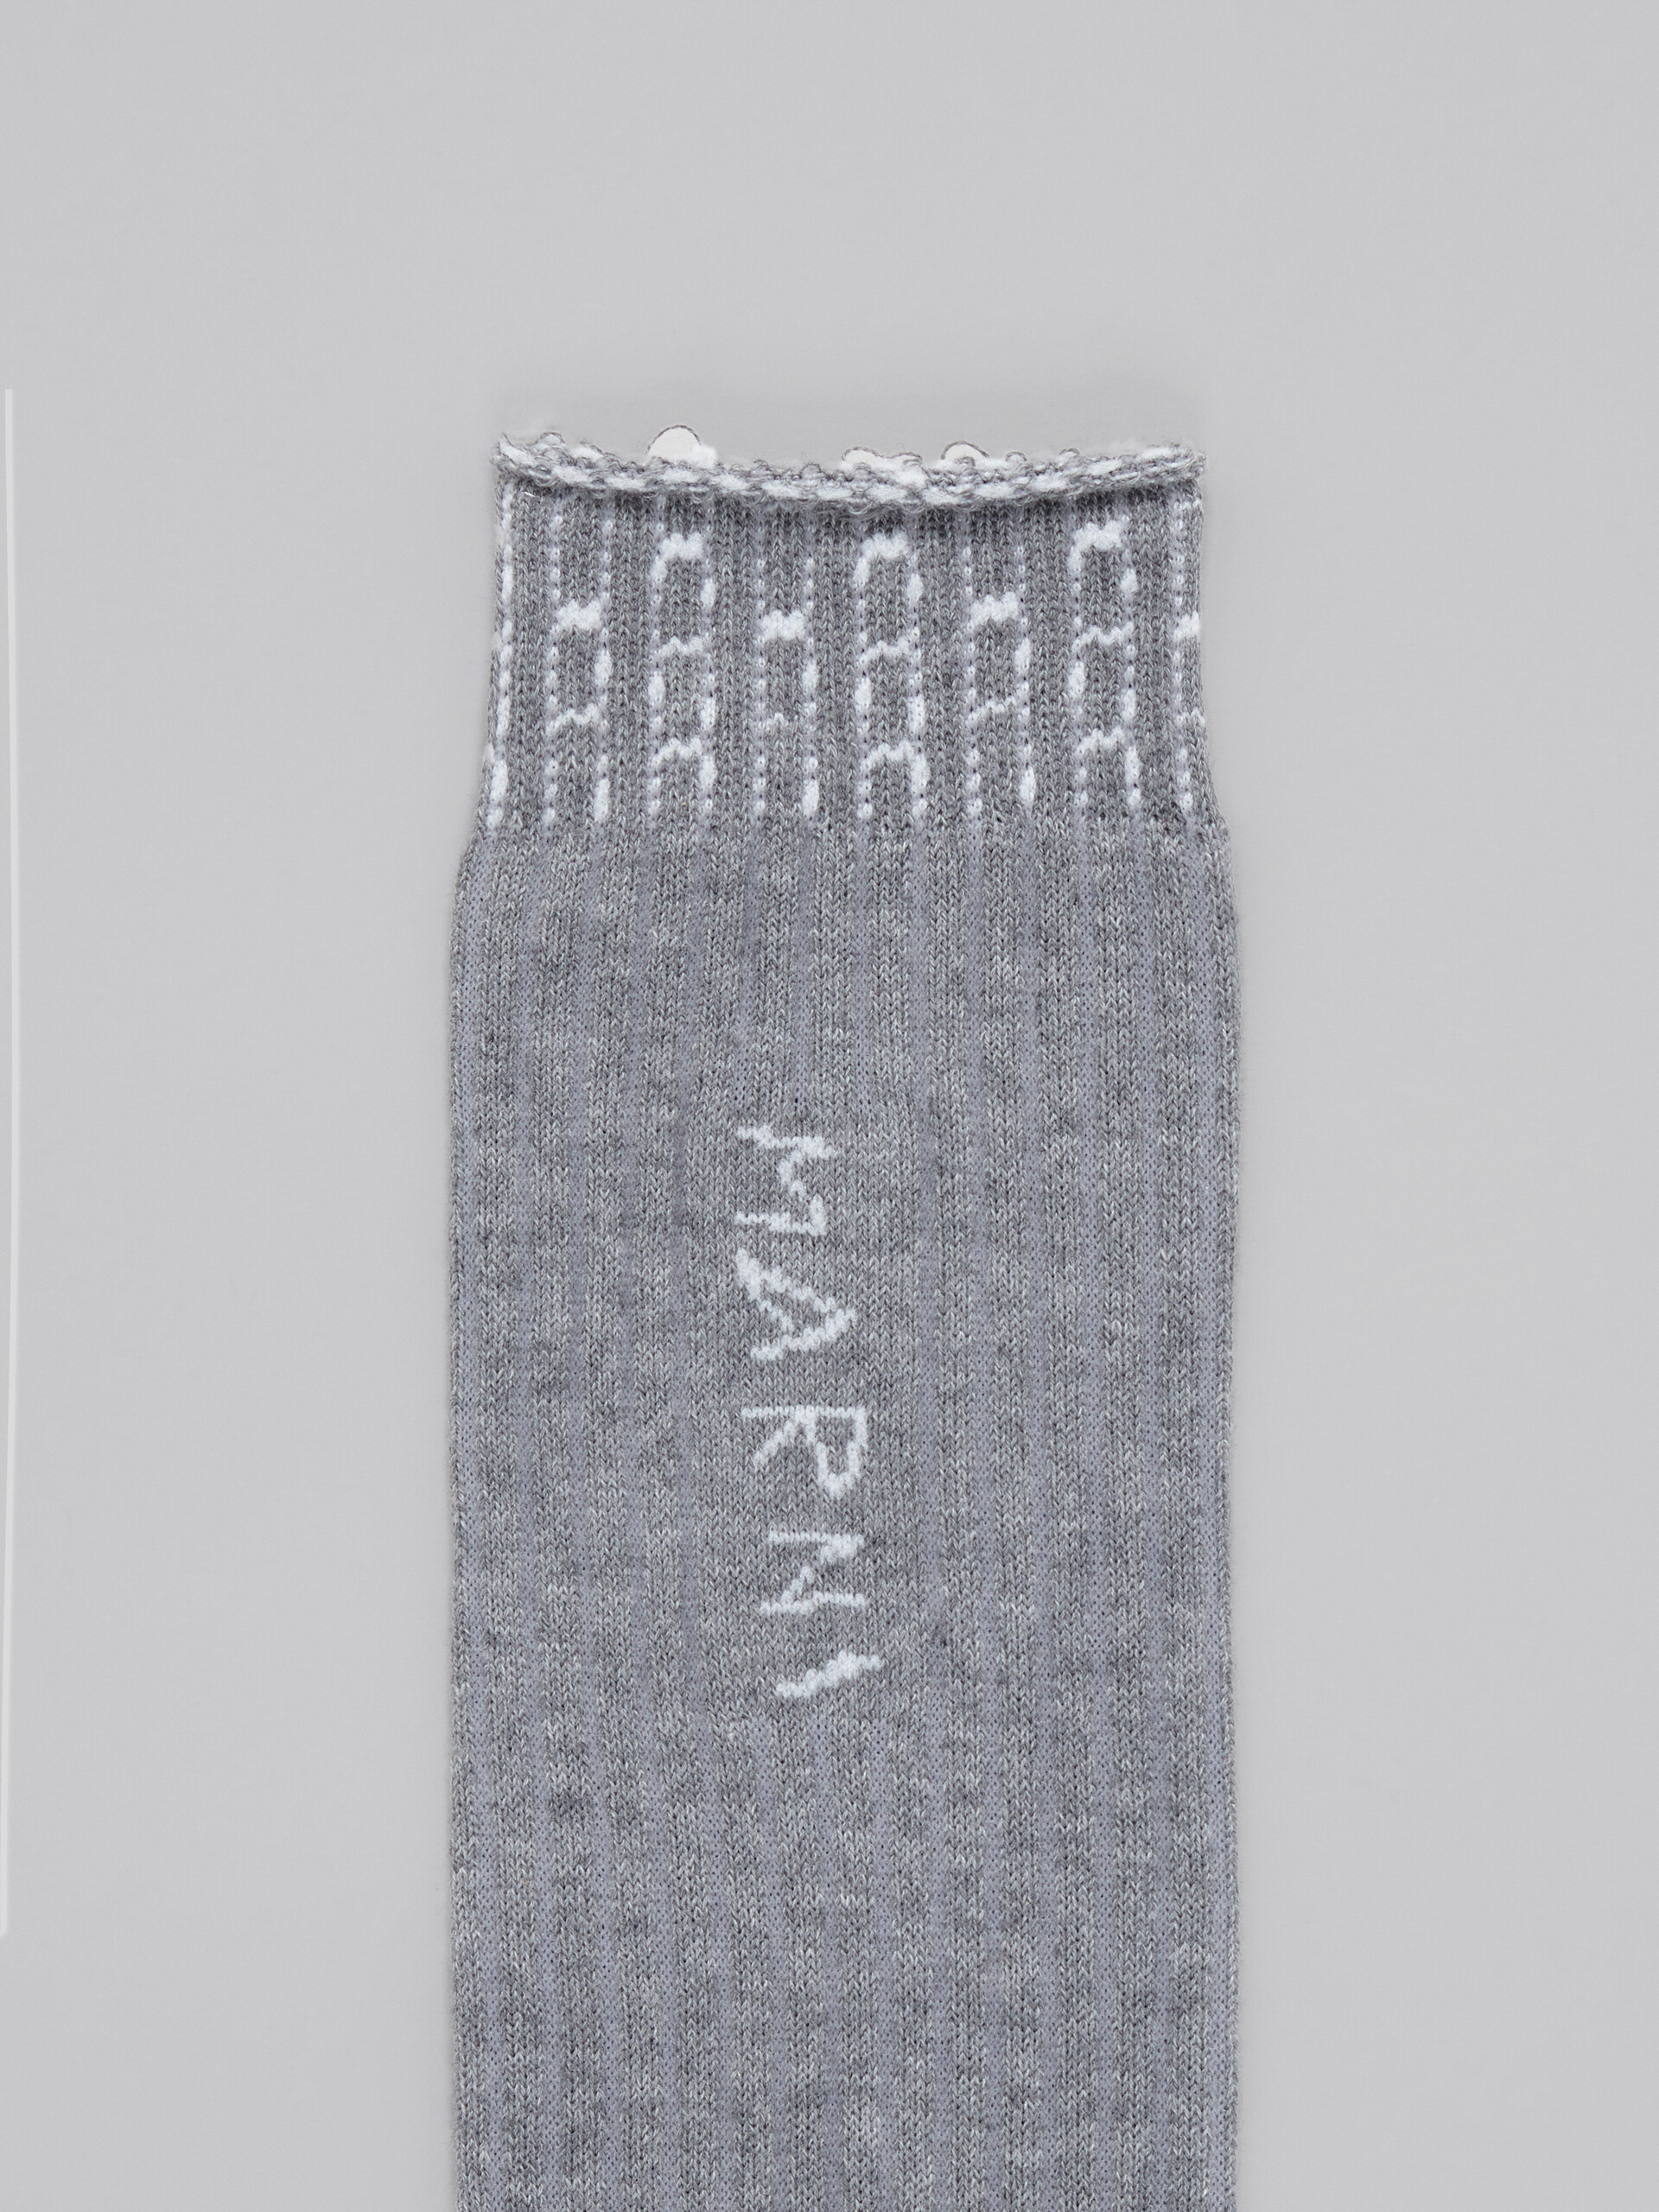 Grey cotton and nylon socks with mending - Socks - Image 3